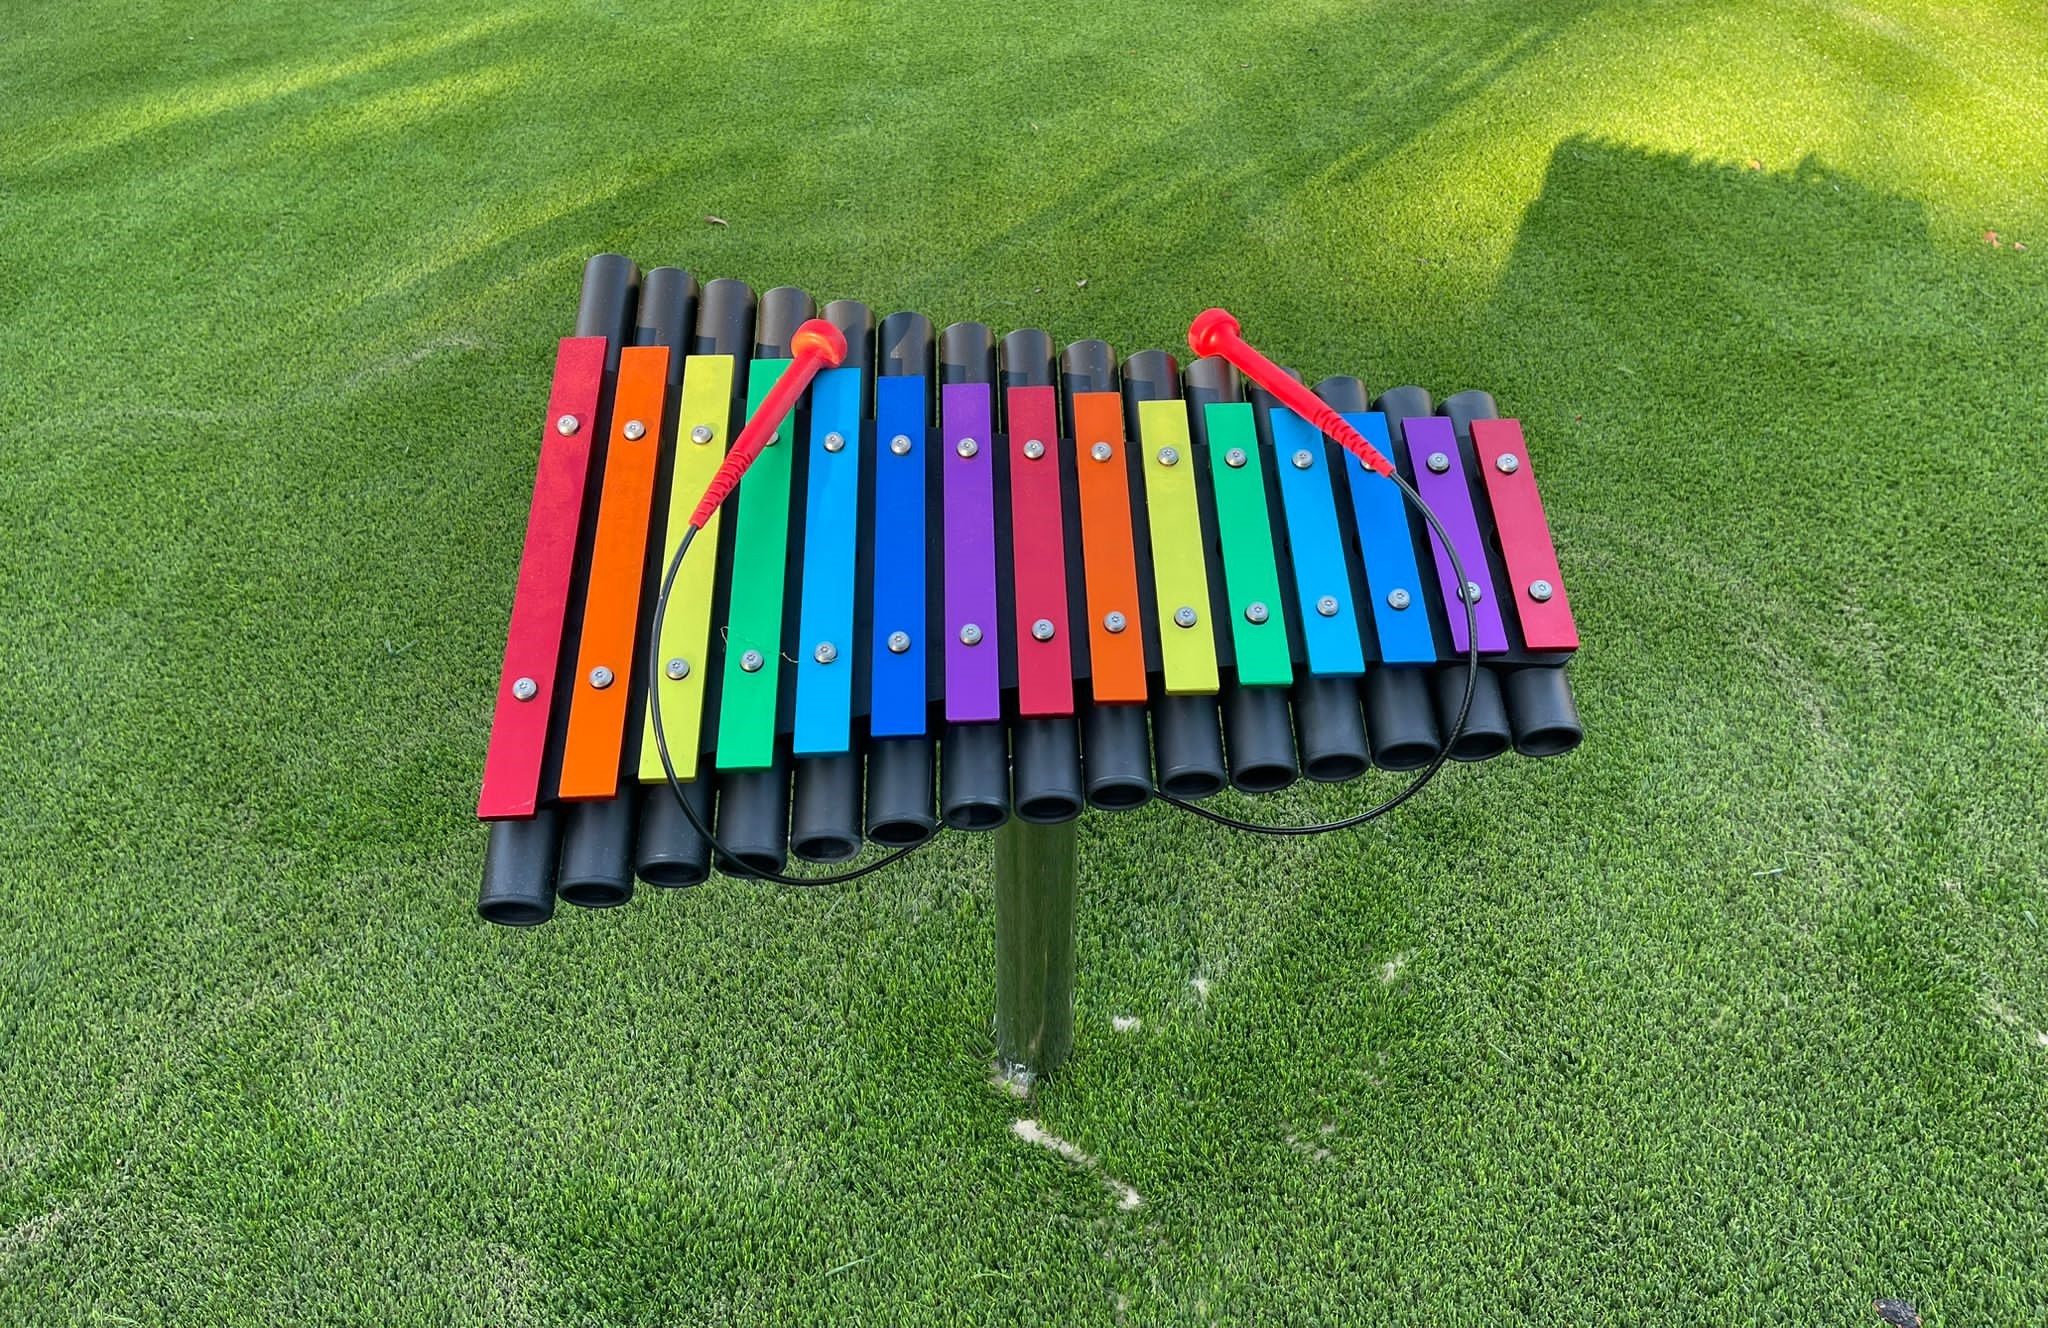 Outdoor musical instrument installed in grass